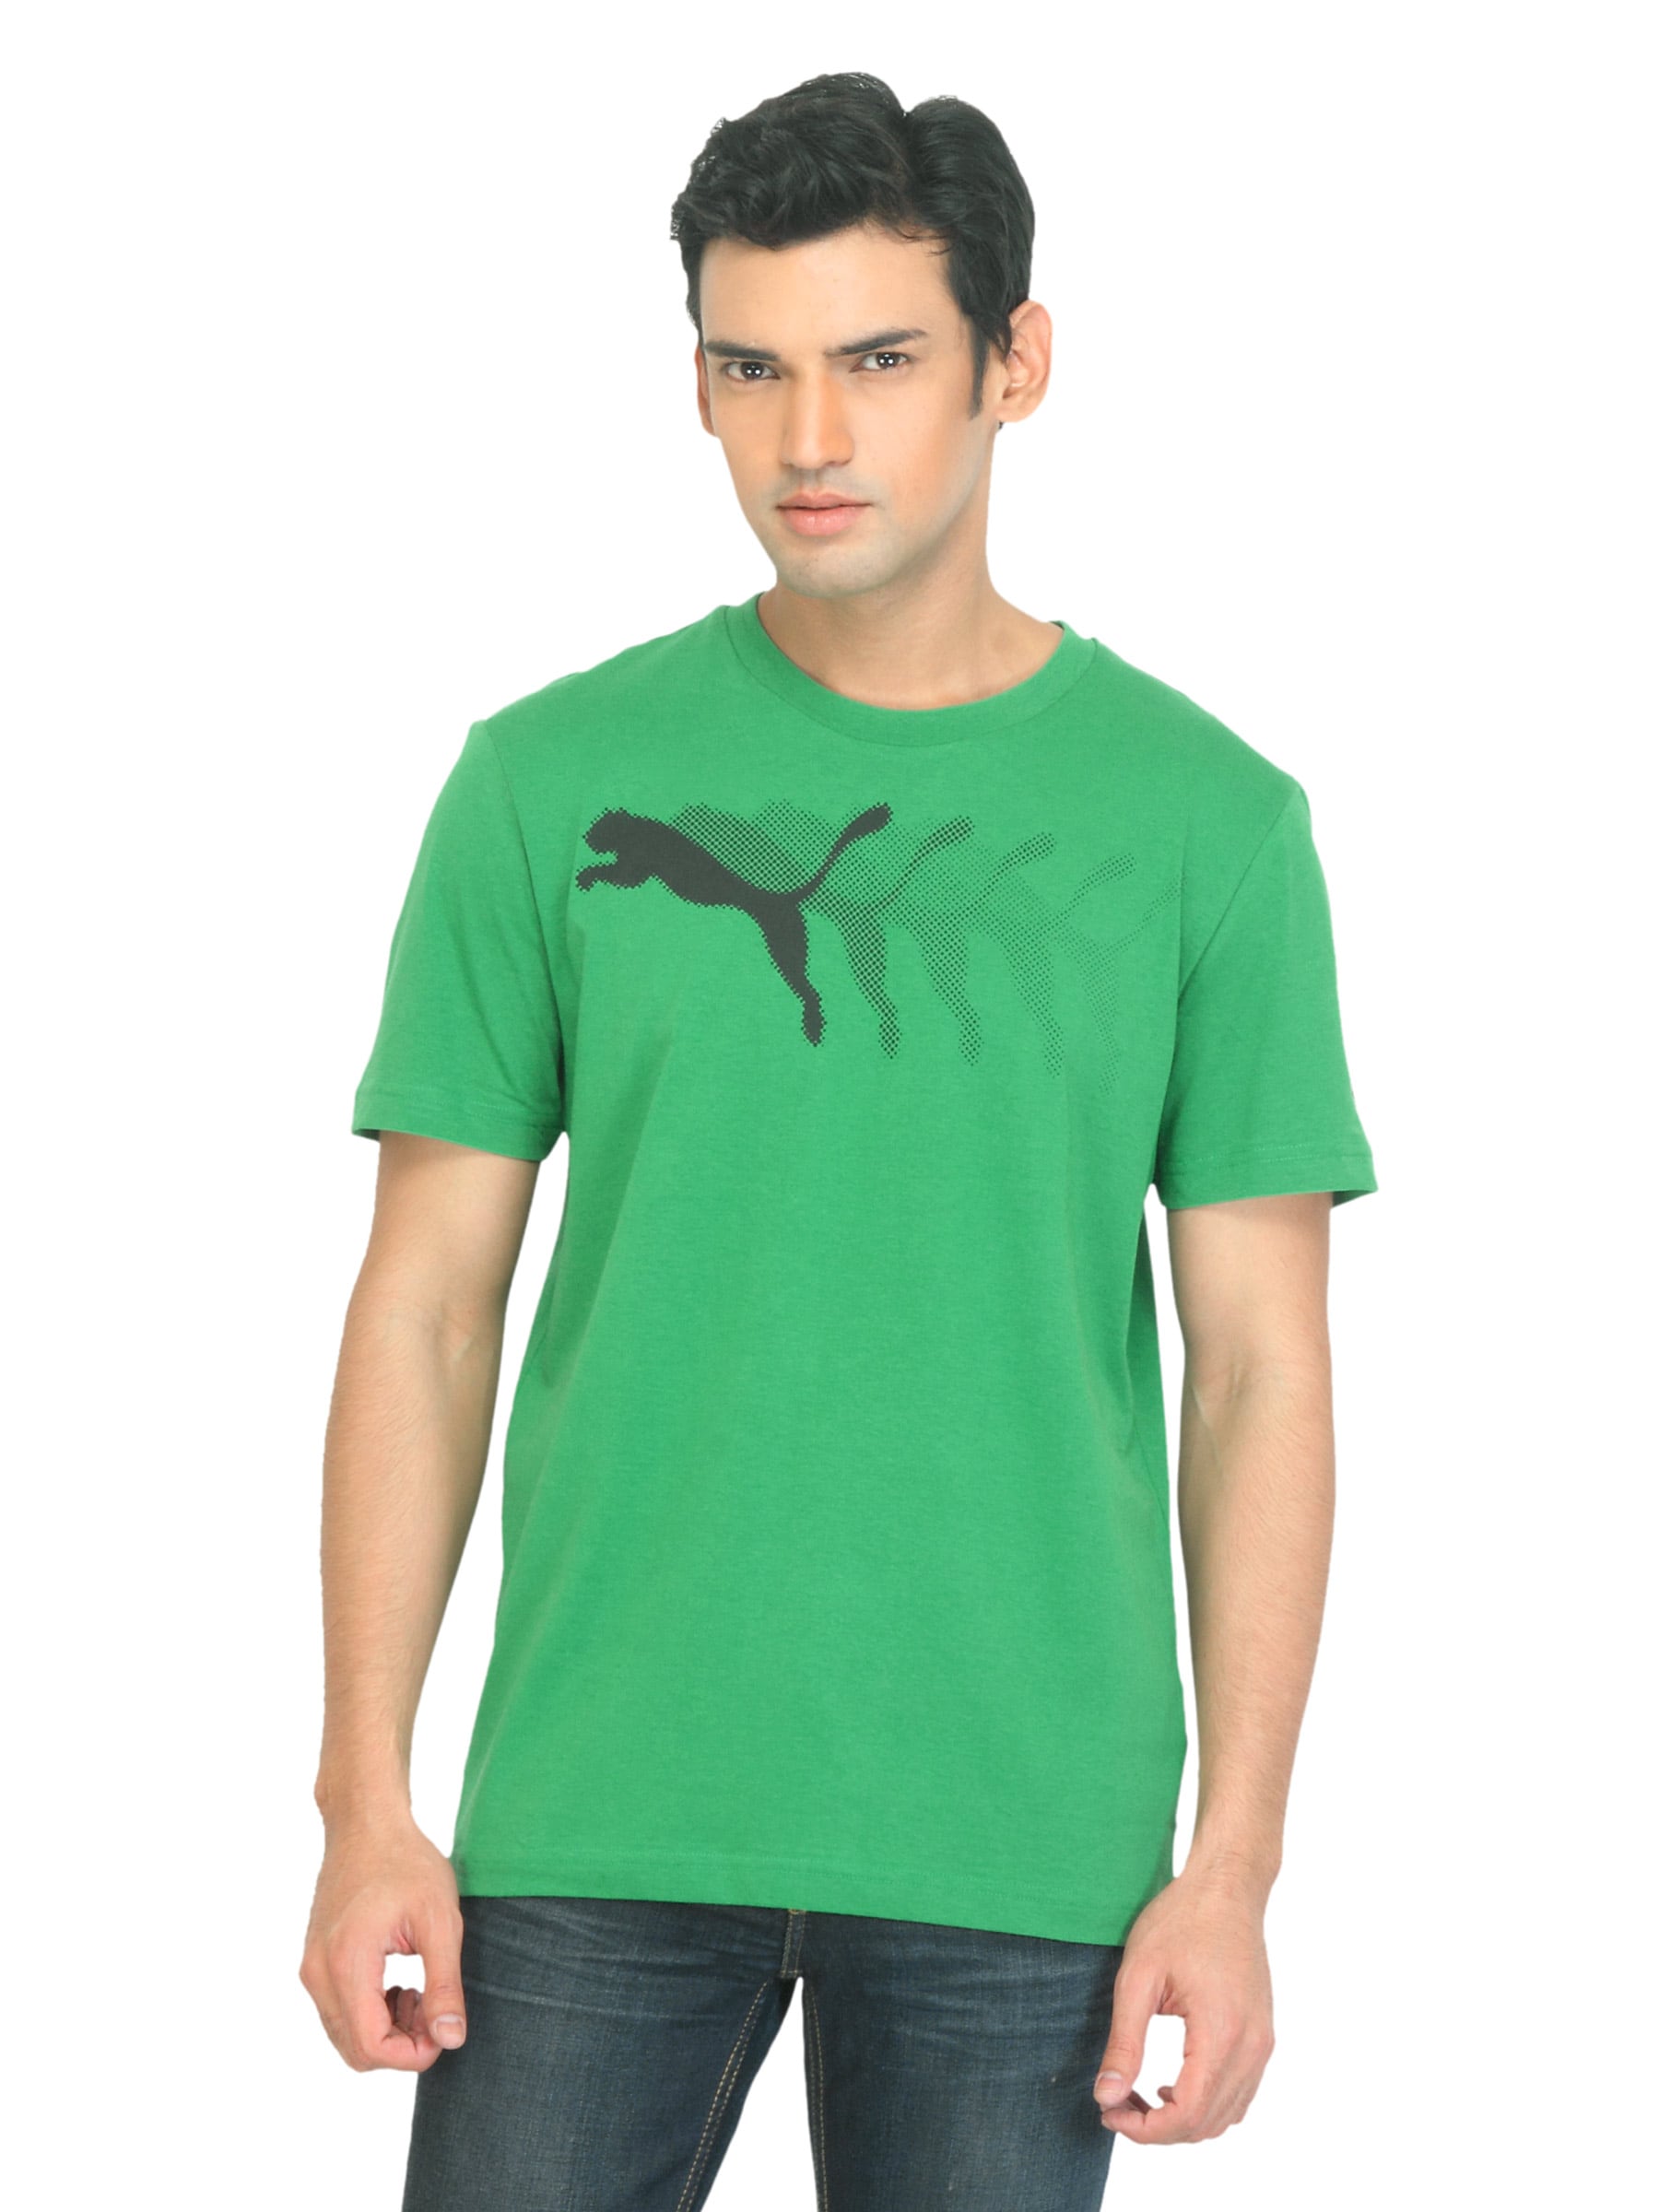 Puma Men Semi Graphic Green T-shirt